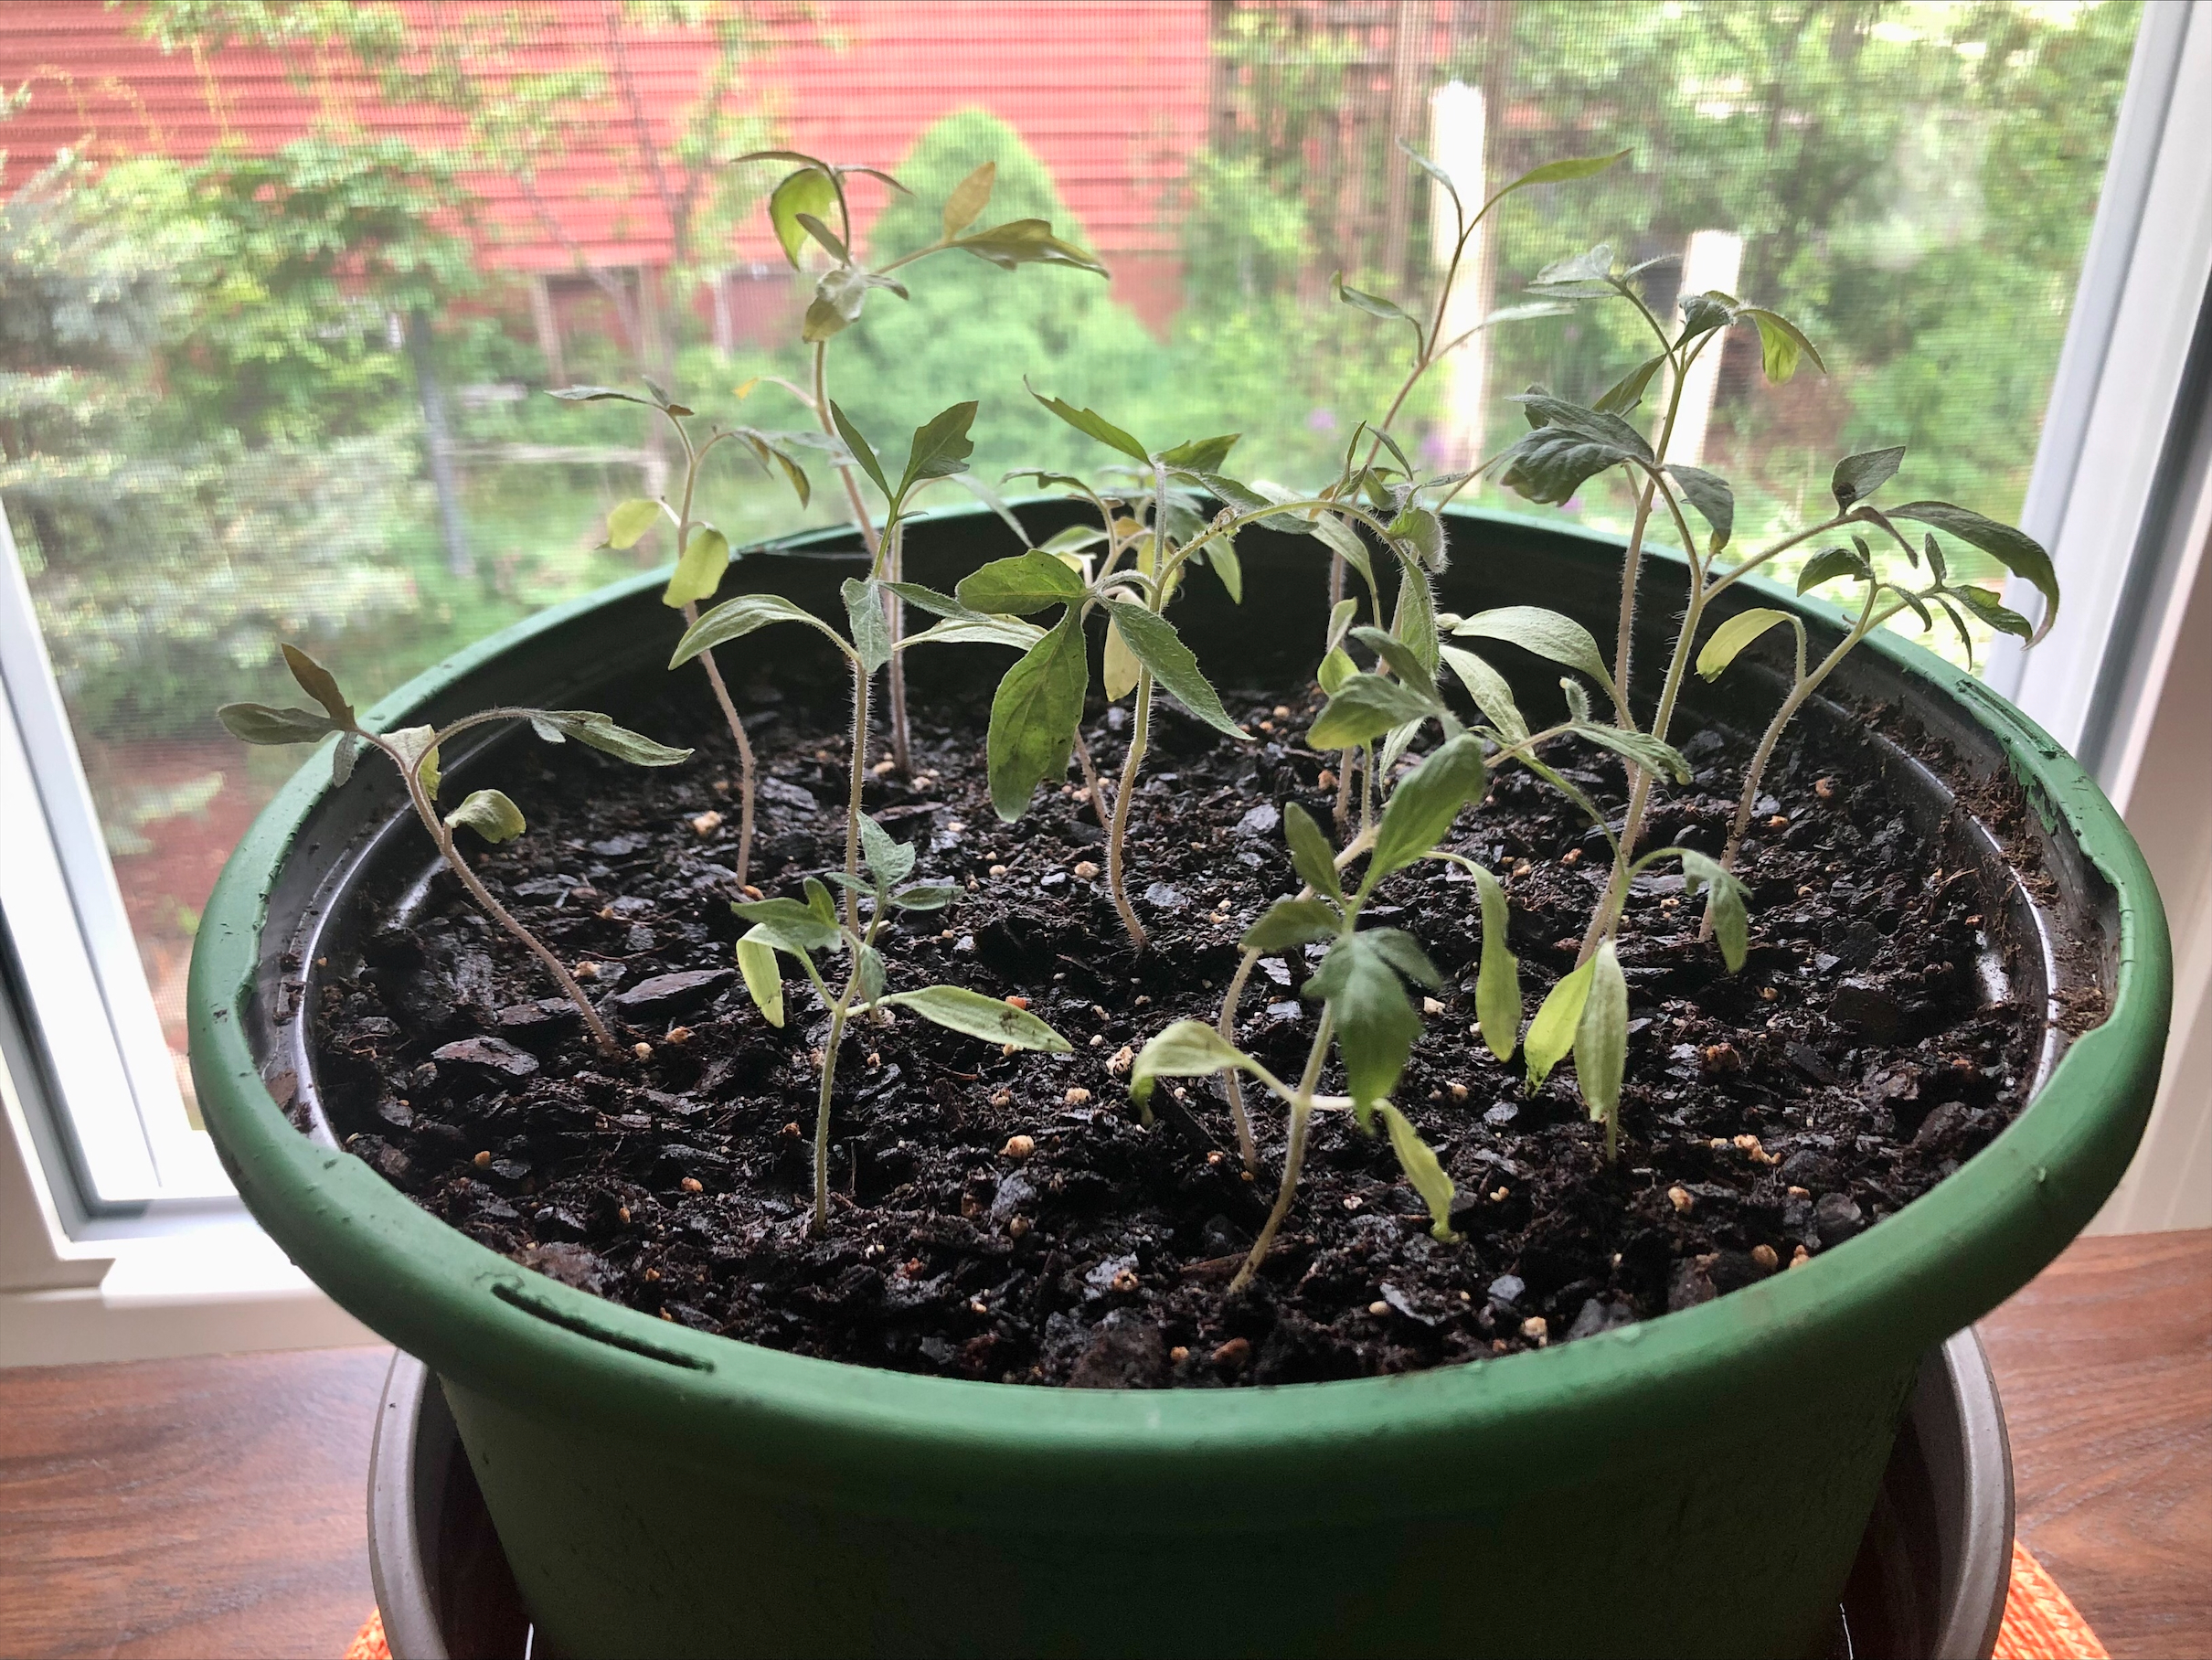 Tomato plants growing